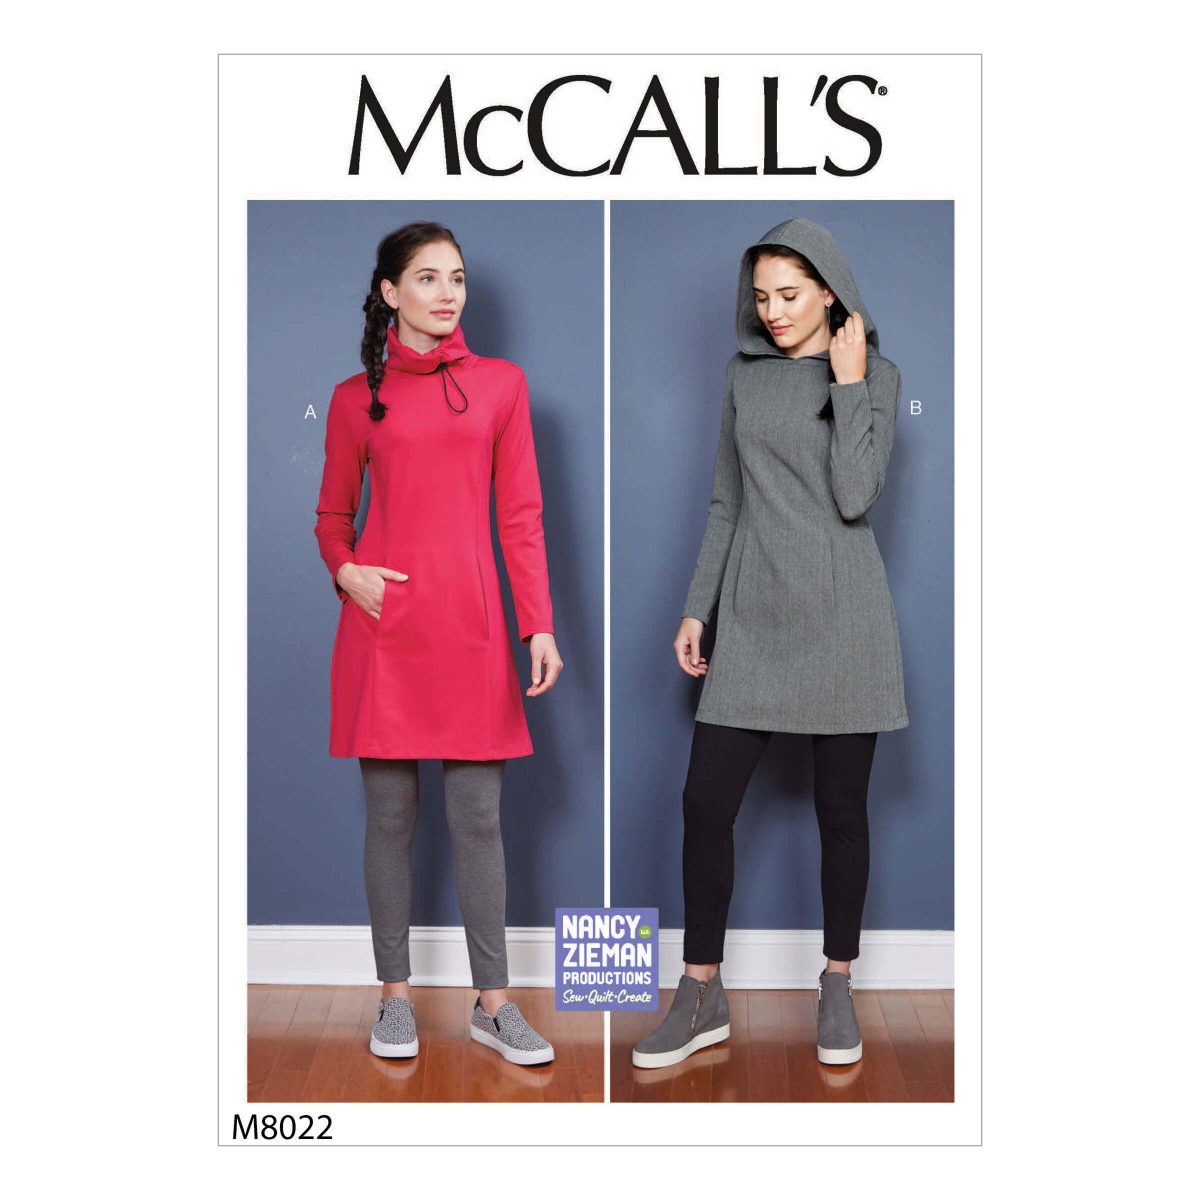 McCall's Sewing Pattern M8022 Misses' Dresses, Nancy Zieman